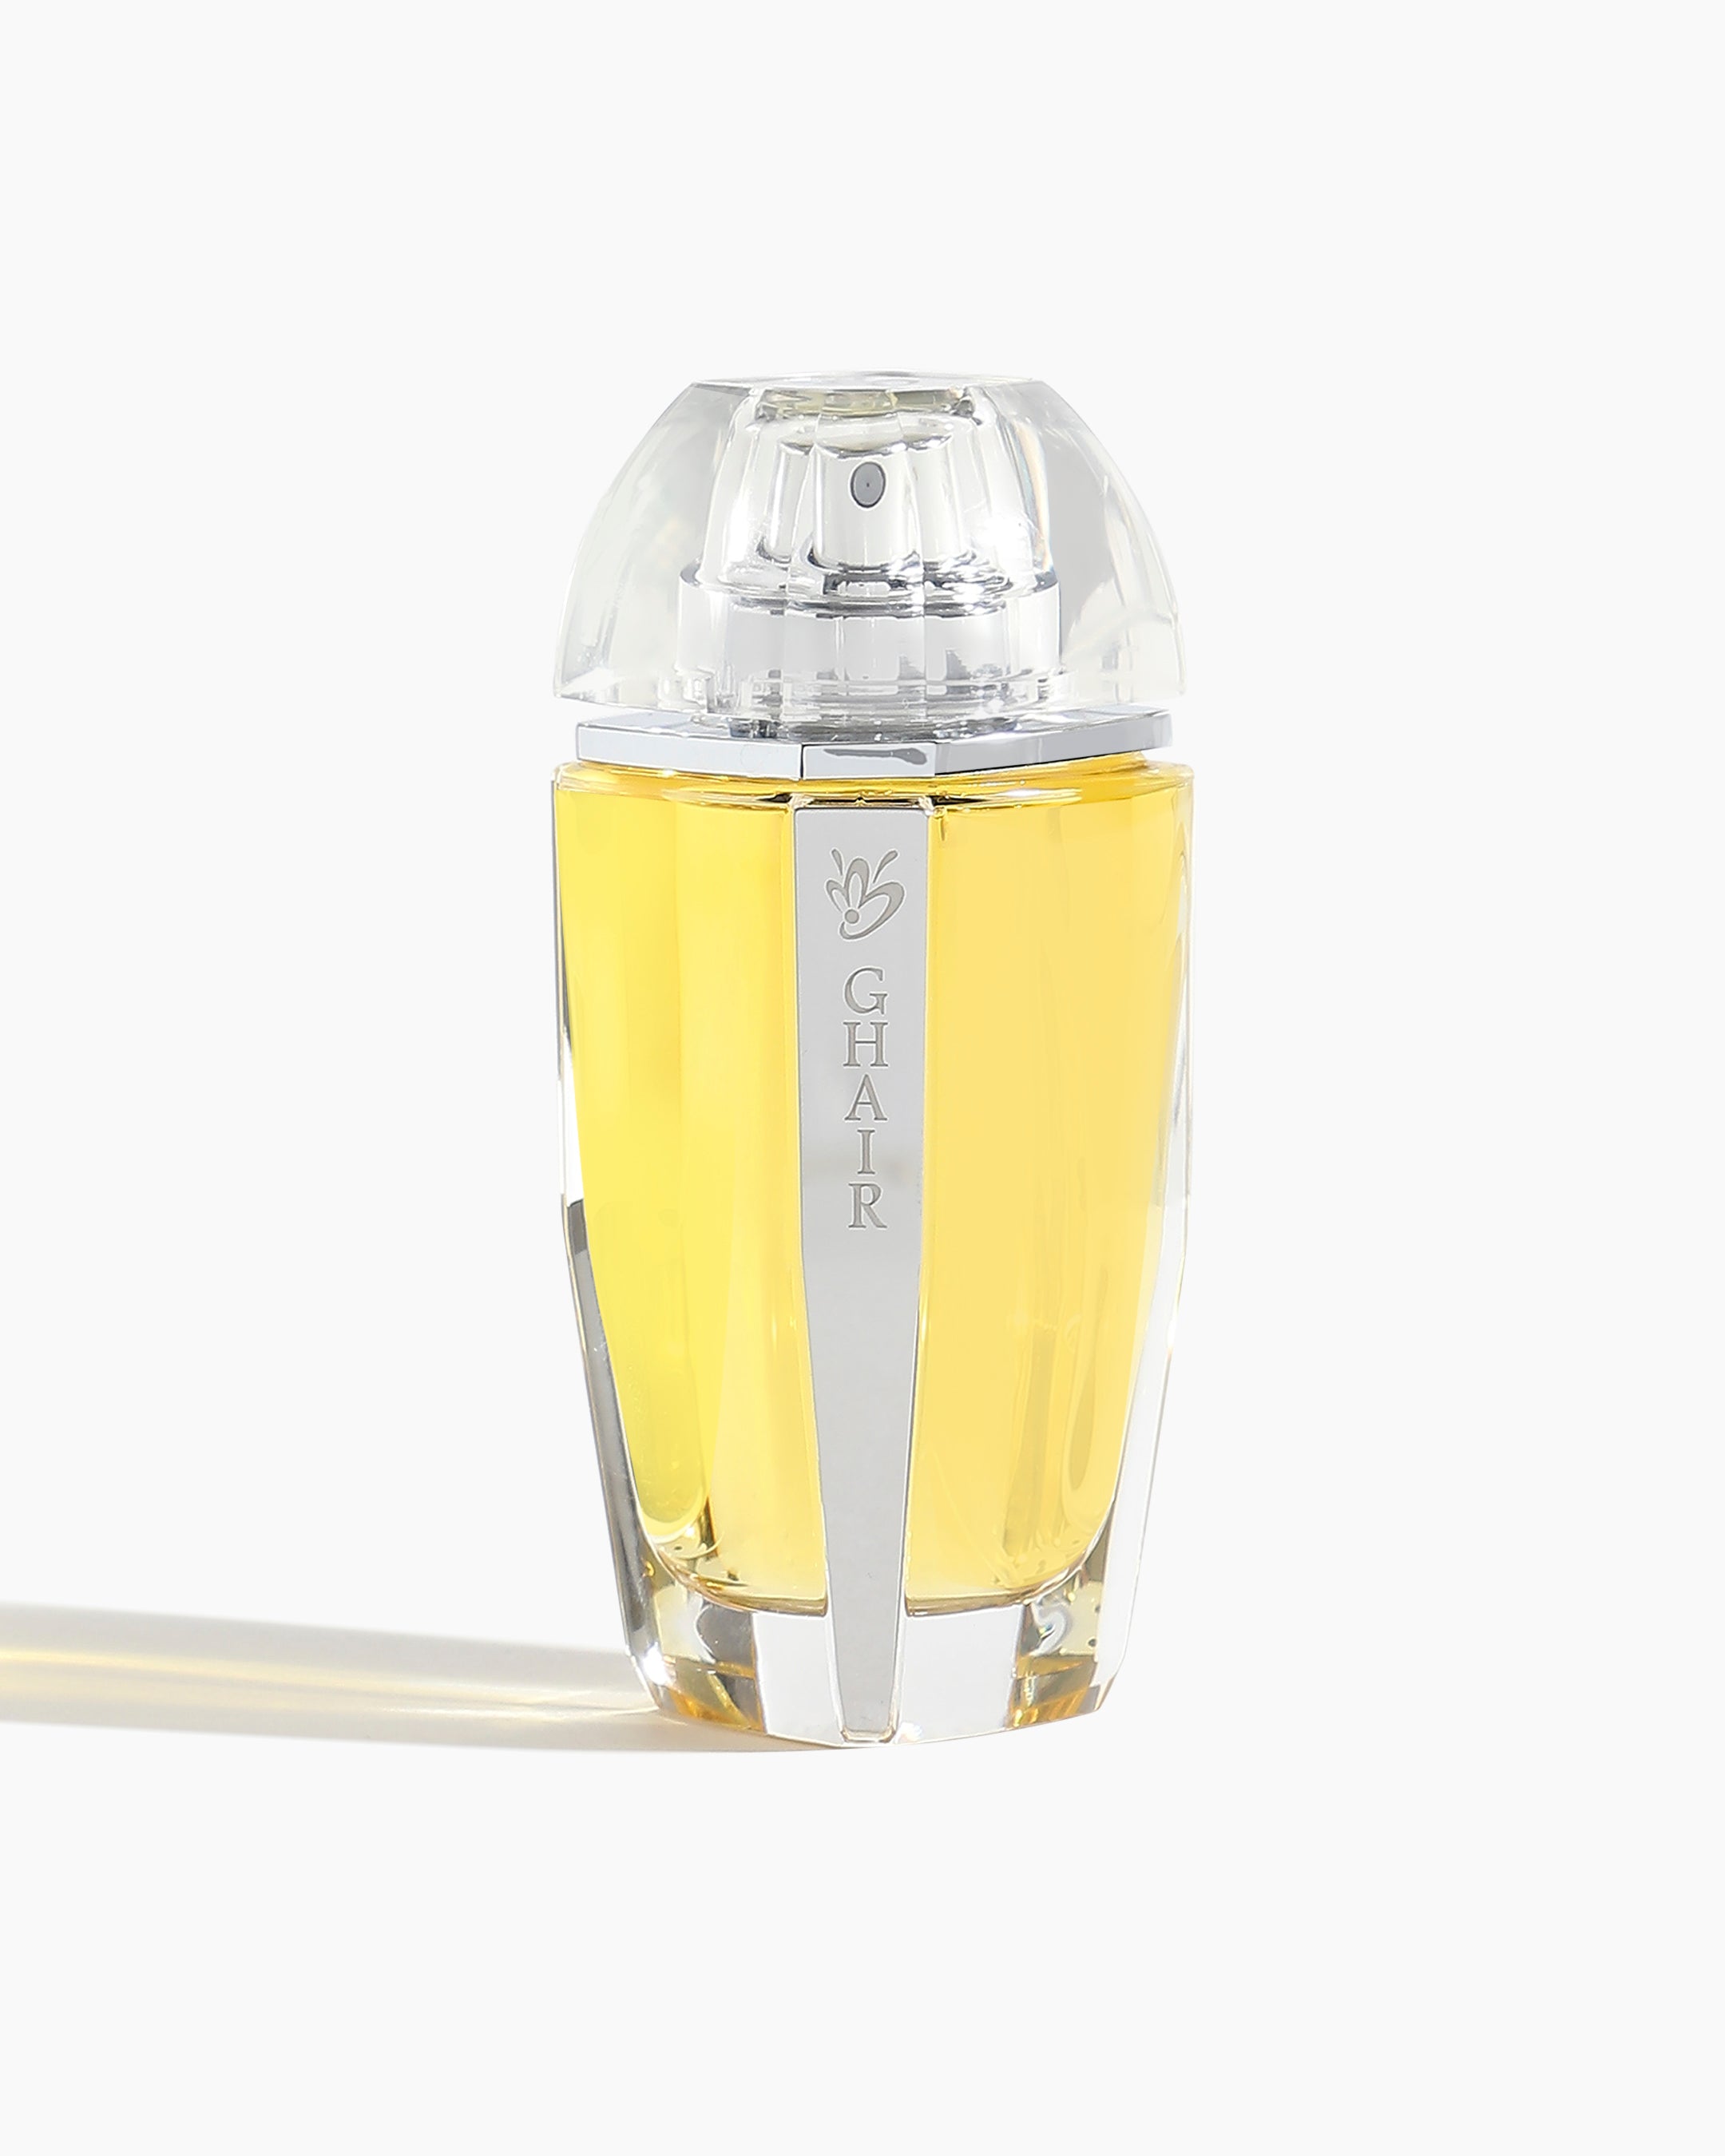 Ghair Parfum (75ml) from Anfasic Dokhoon - MHGboutique